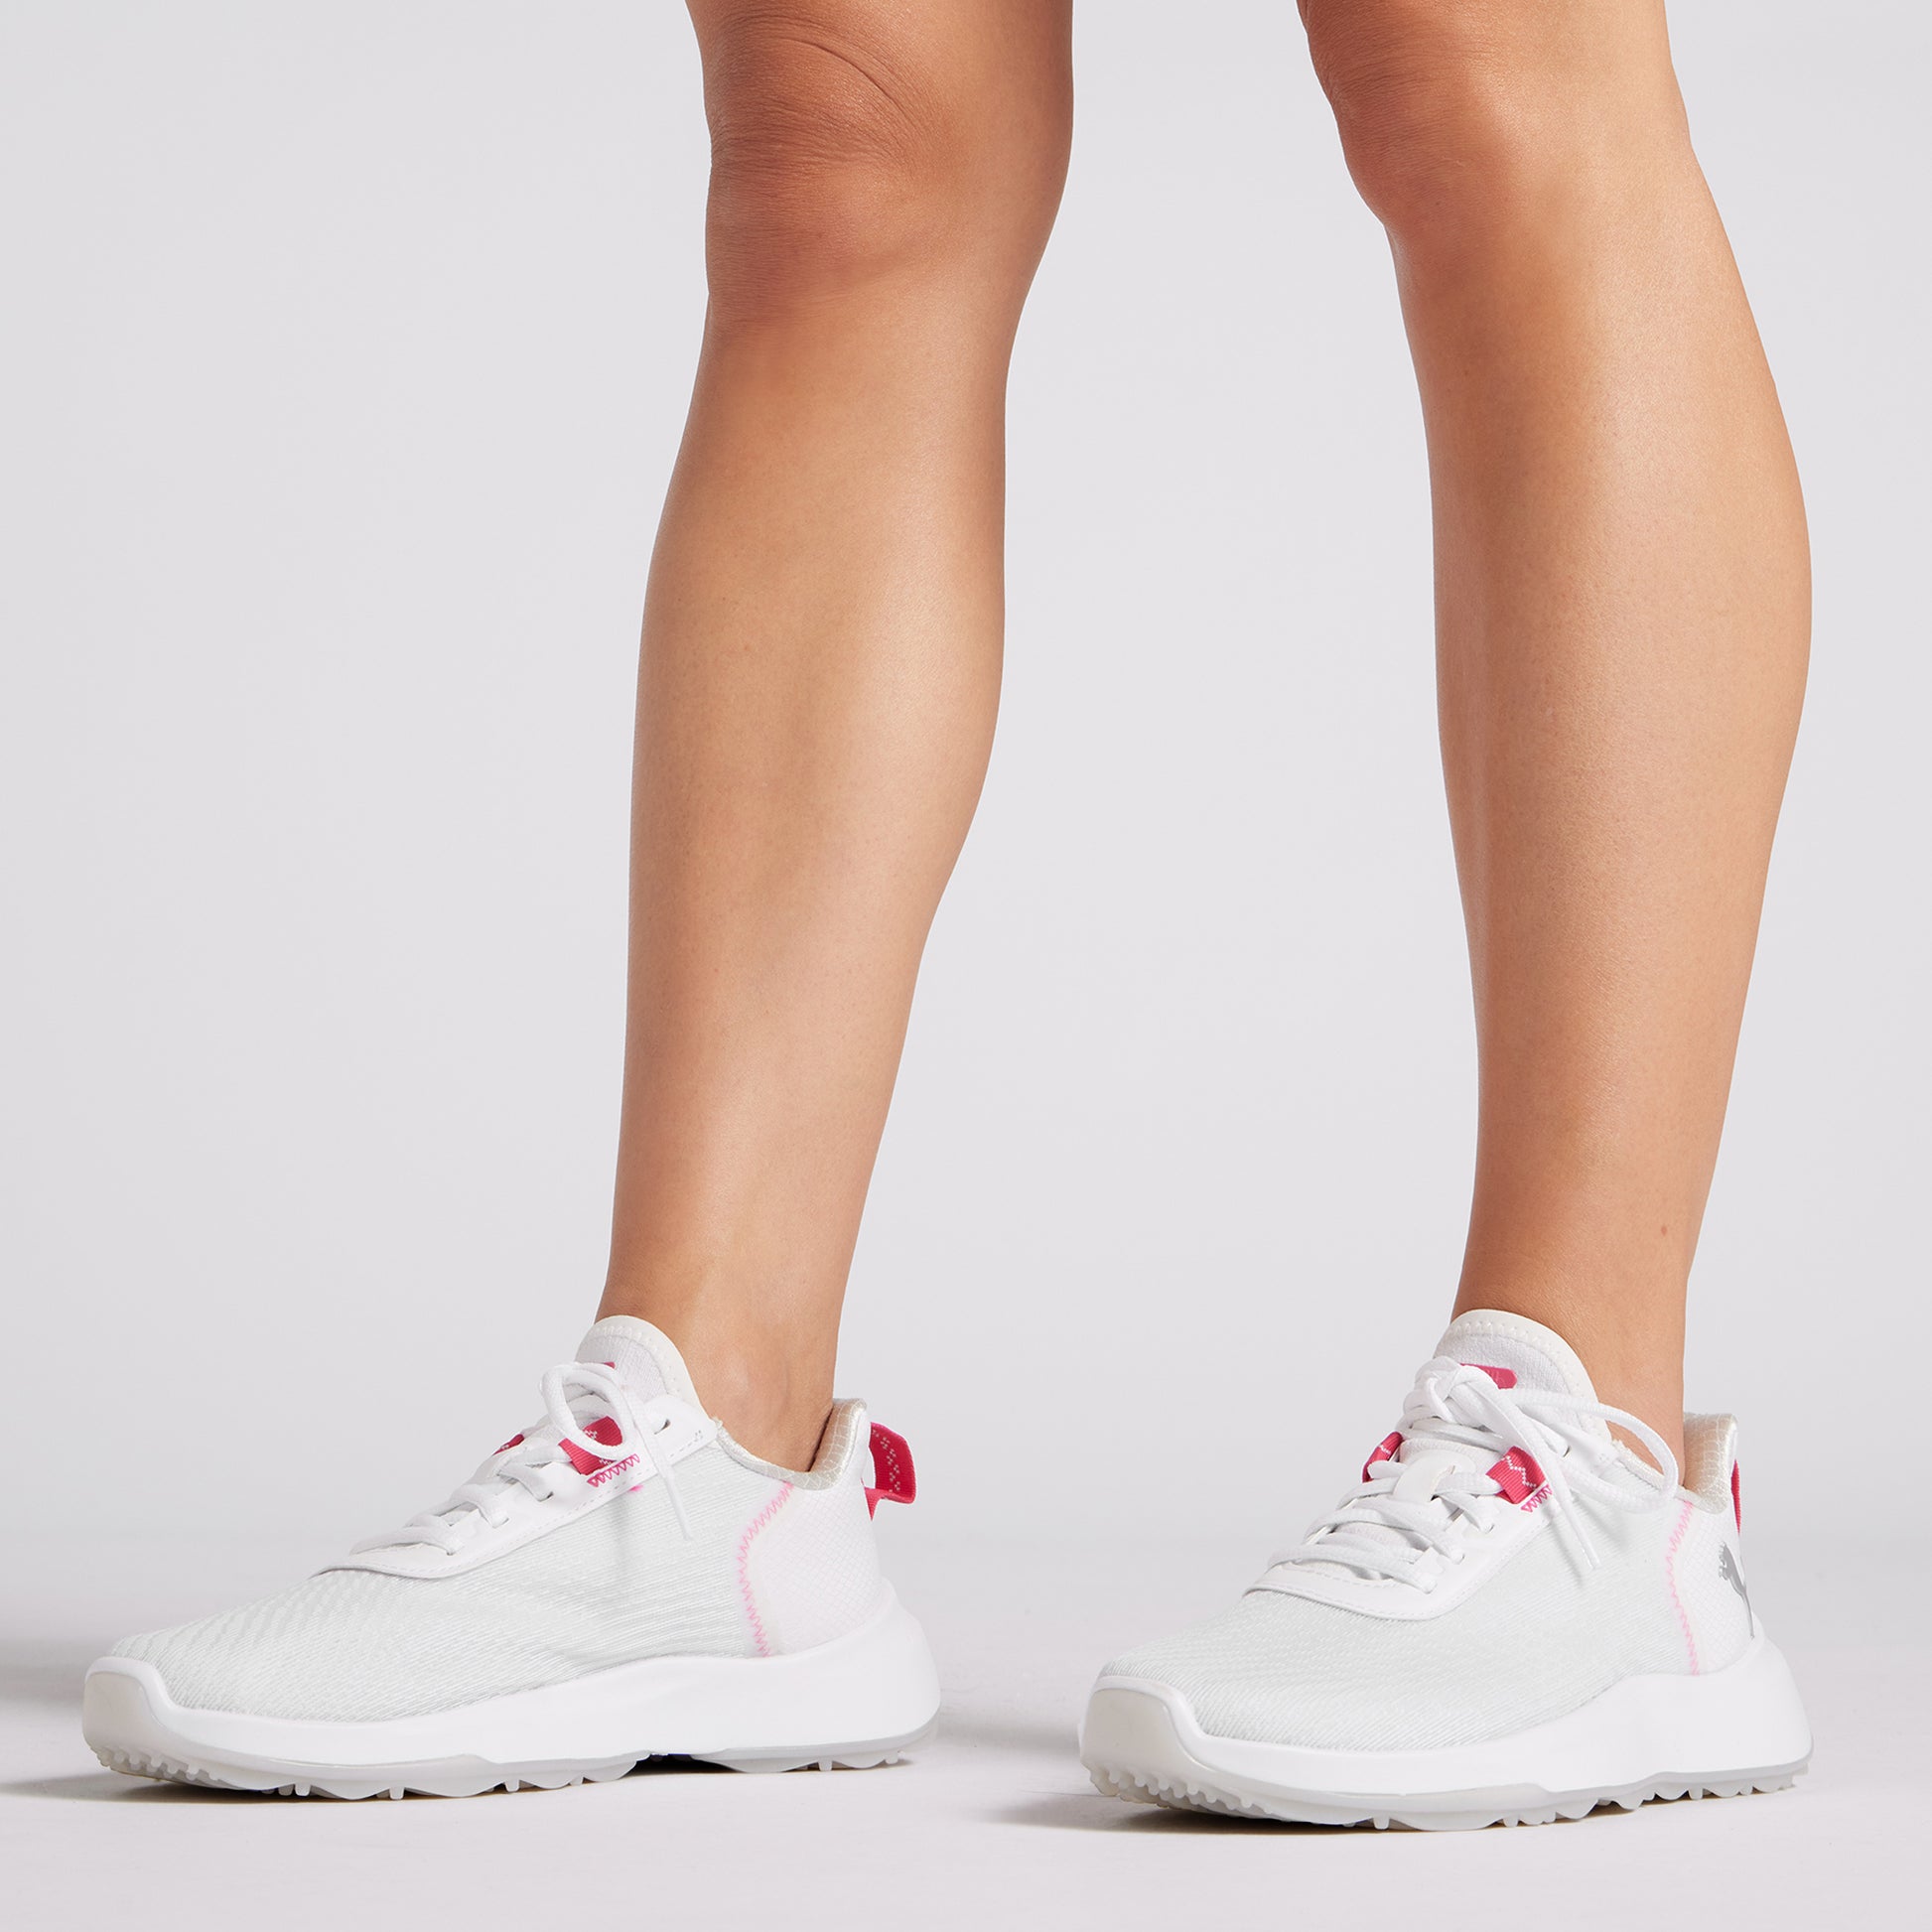 Puma Women's Fusion Crush Golf Shoes in White and Garnet Rose